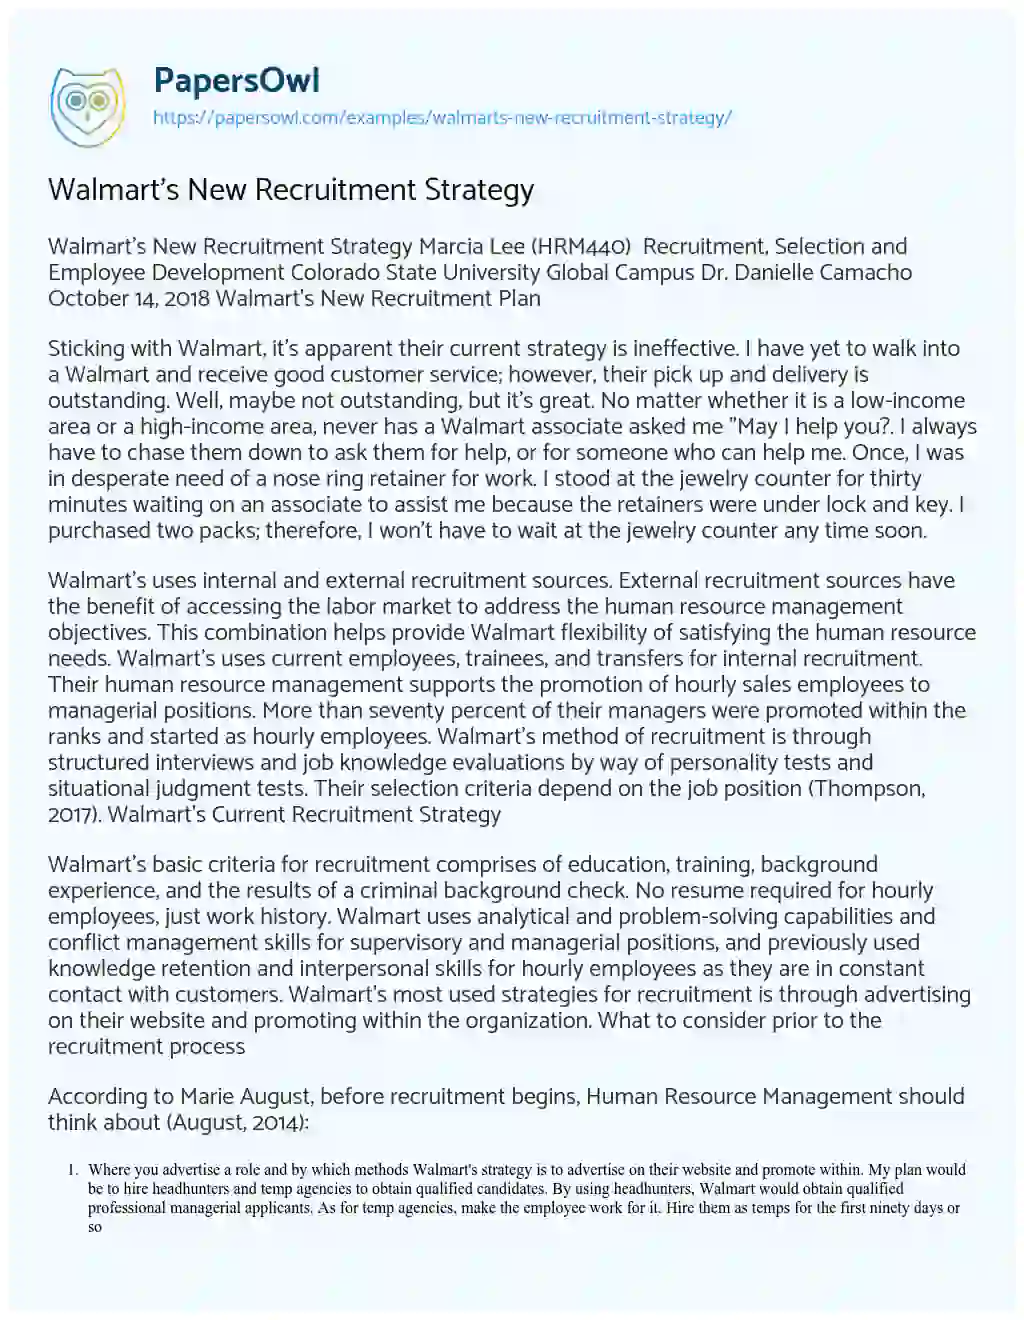 Walmart’s New Recruitment Strategy essay